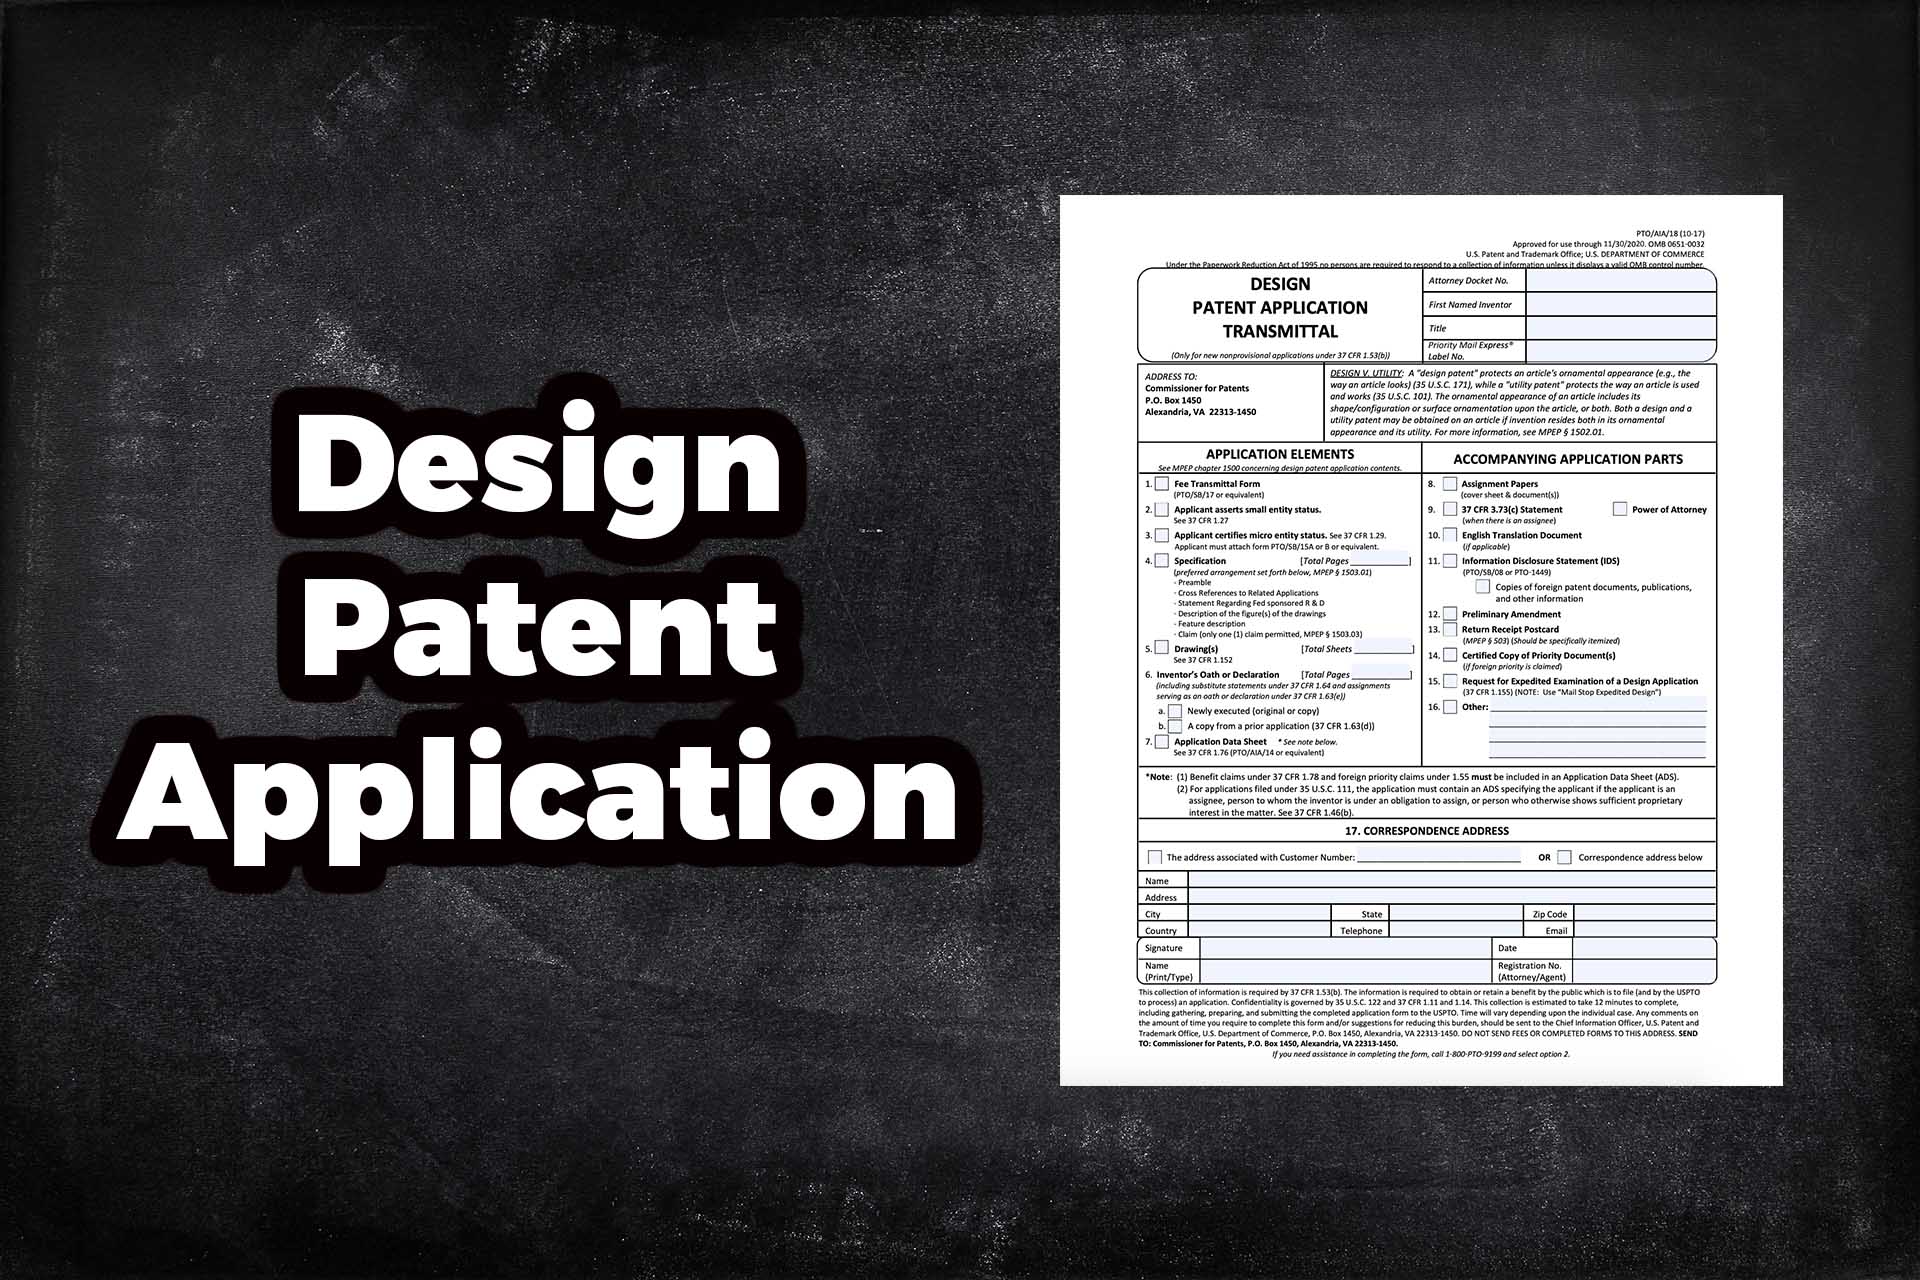 Design Patent Application Form